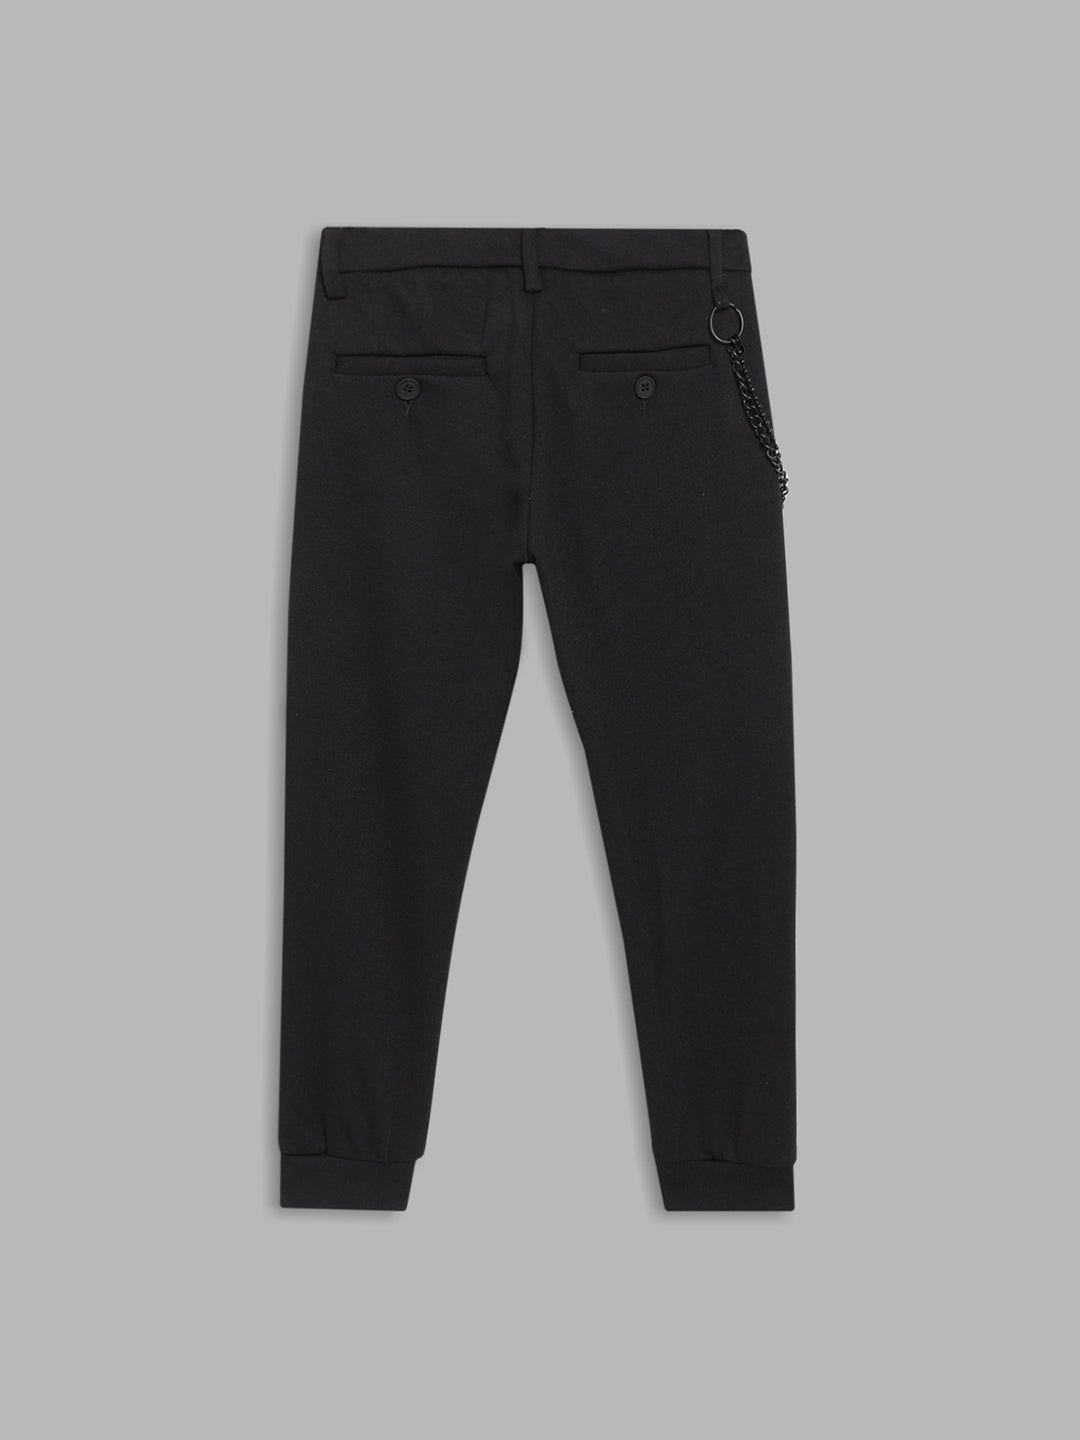 Black Trousers | Boys Slim & Regular Fit Trousers | Next UK